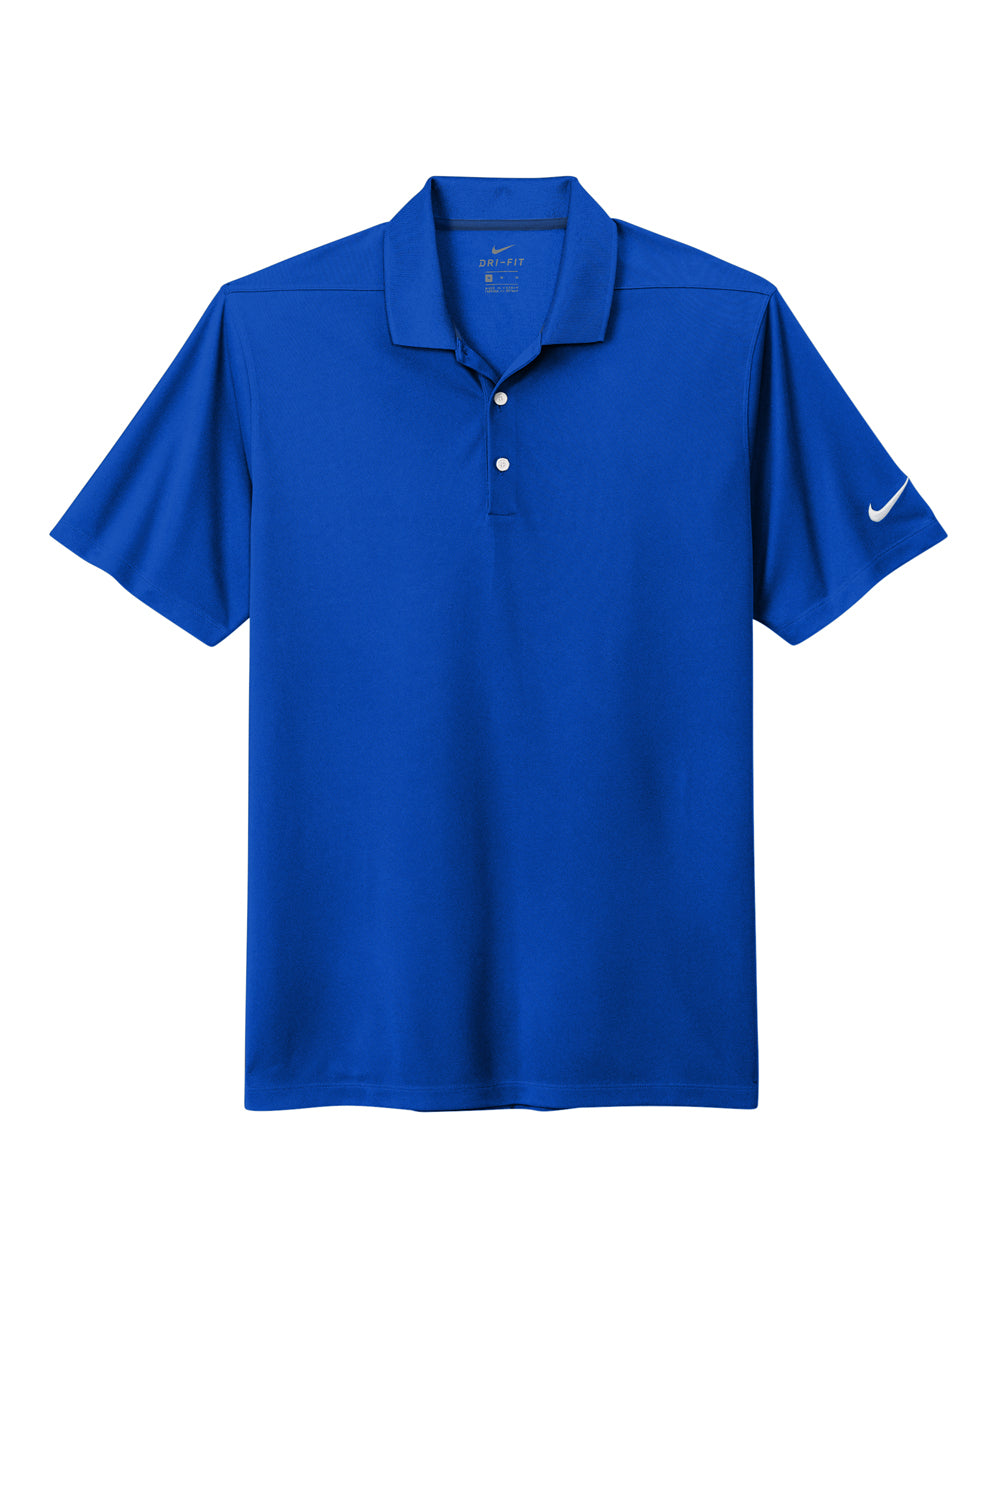 Nike NKDC1963 Mens Dri-Fit Moisture Wicking Micro Pique 2.0 Short Sleeve Polo Shirt Game Royal Blue Flat Front